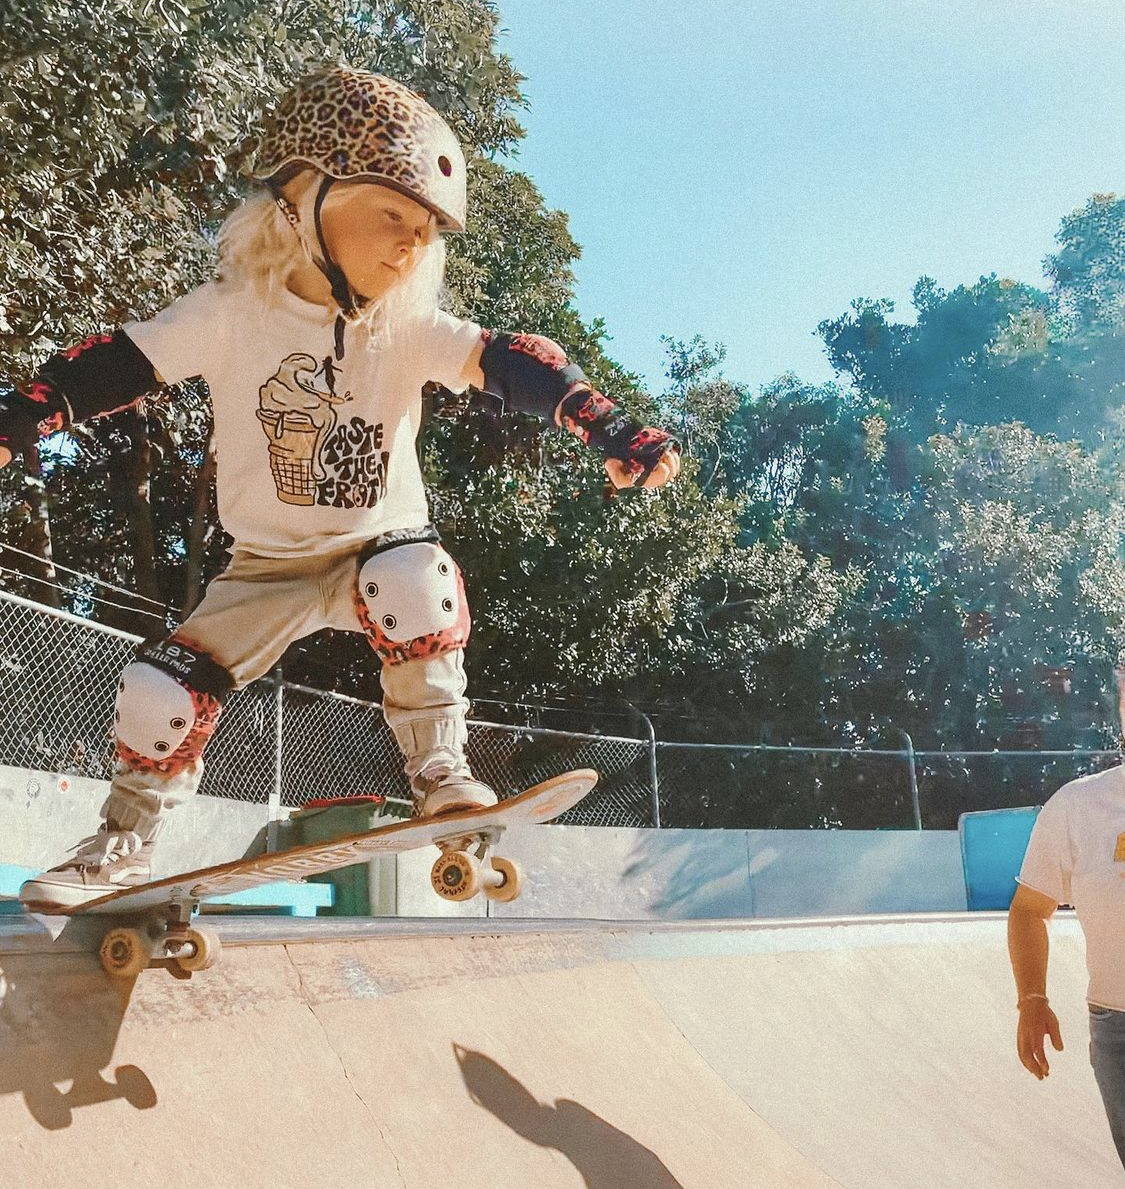 little kid dropping in a halfpipe on a skateboard. 